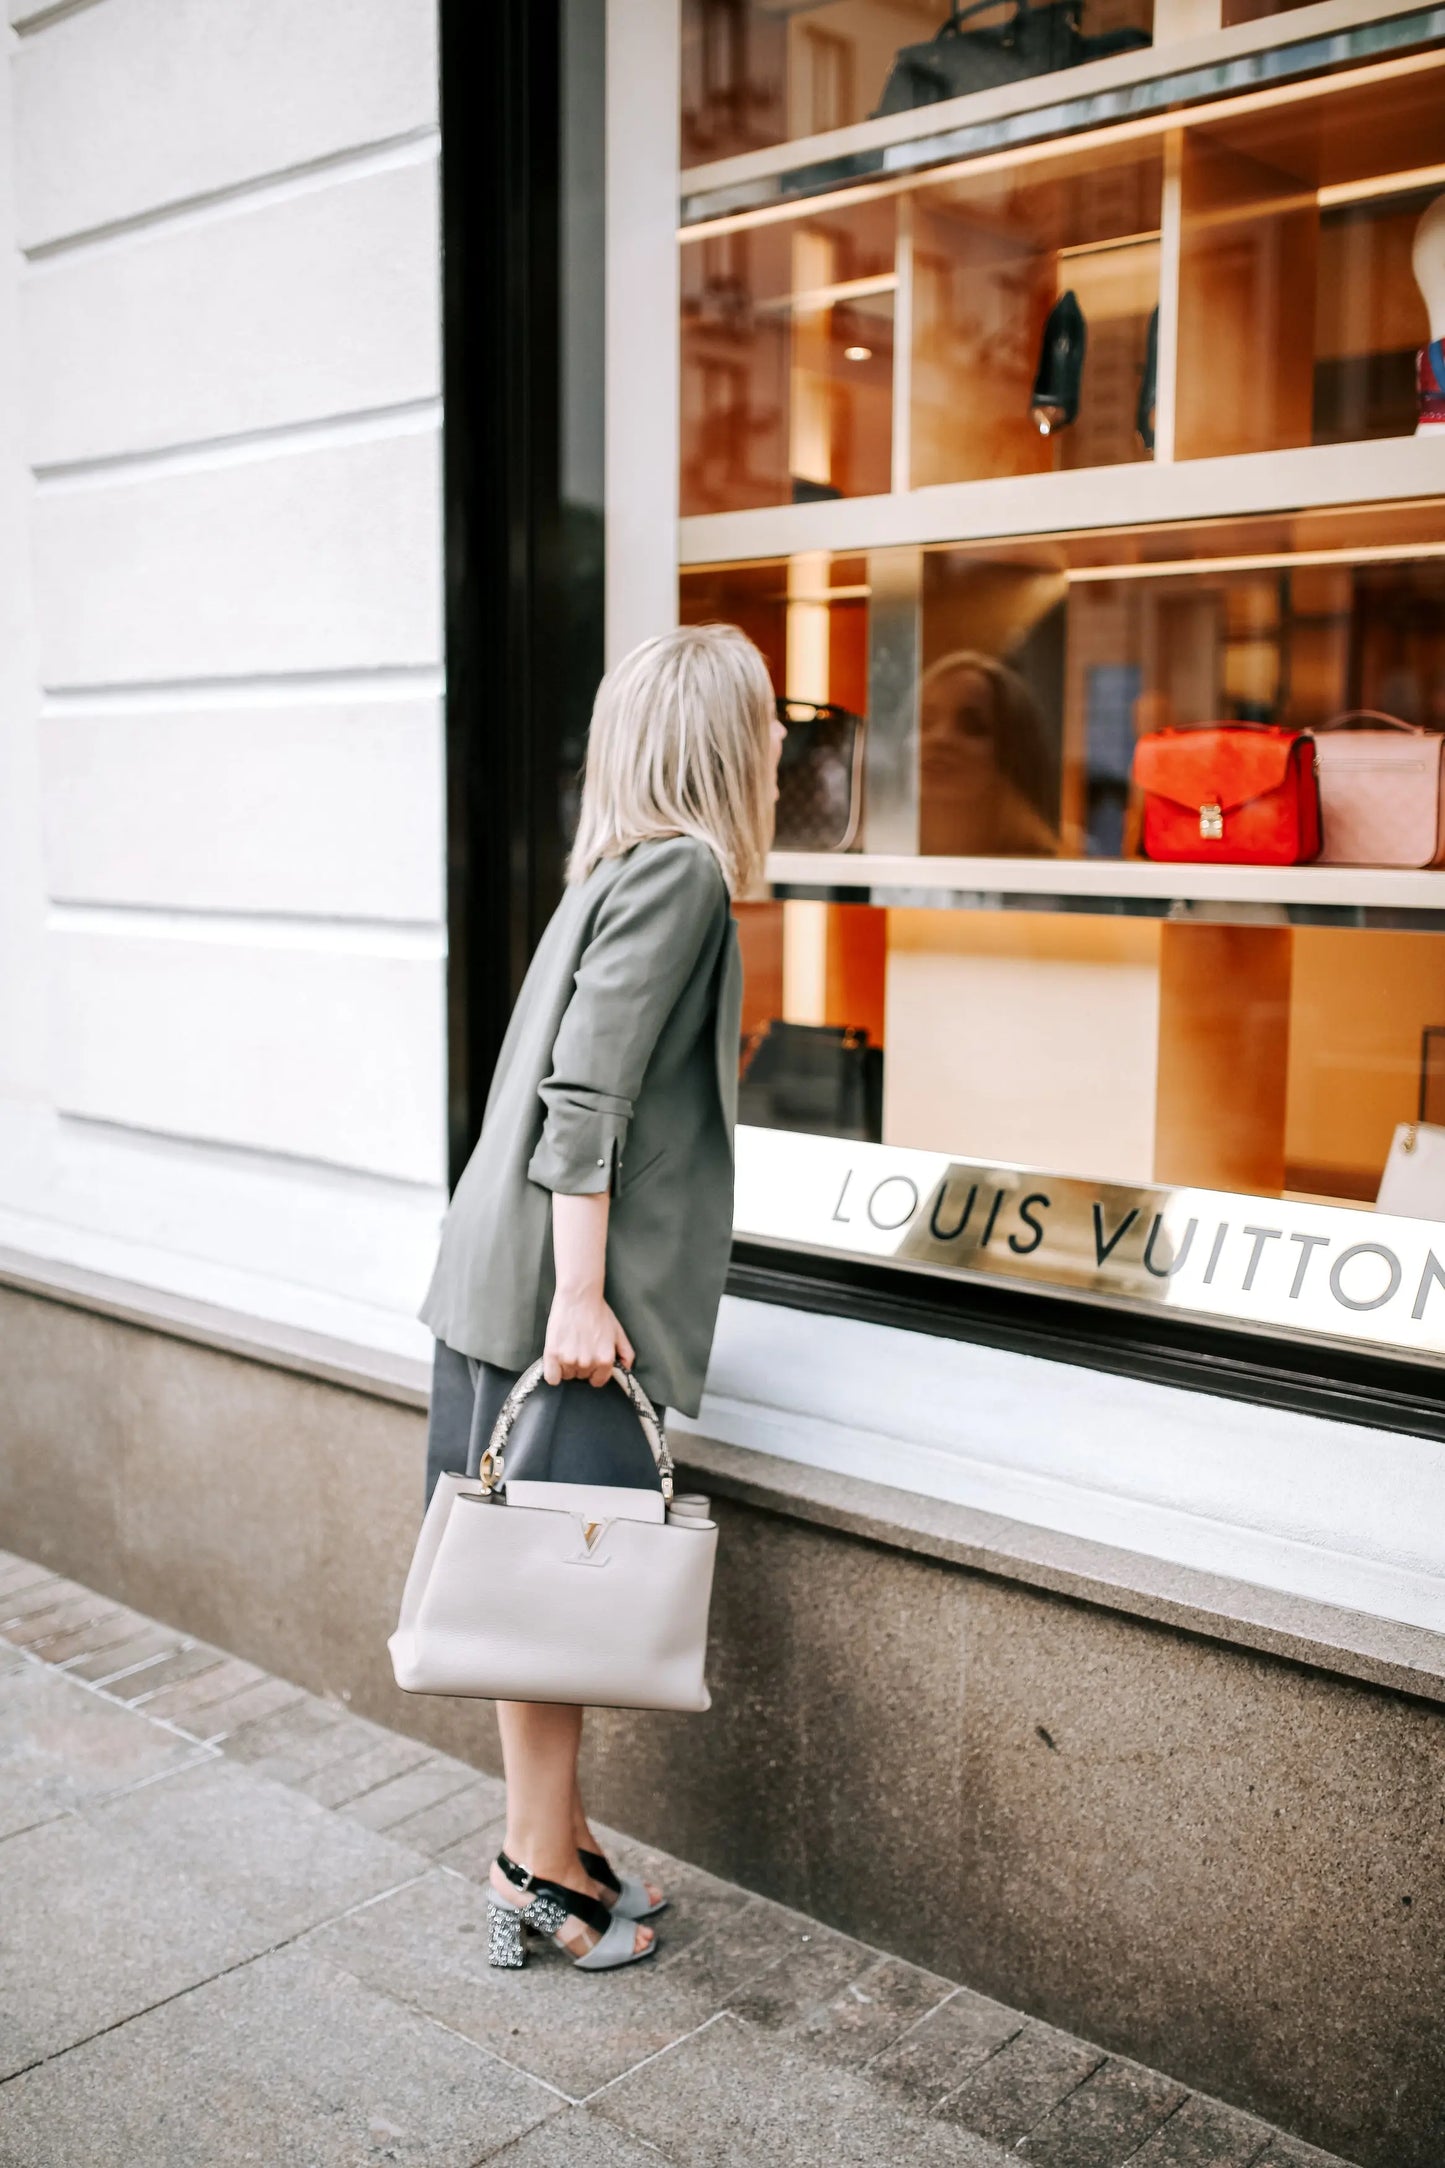 Where Are Popular Louis Vuitton Handbags The Cheapest?